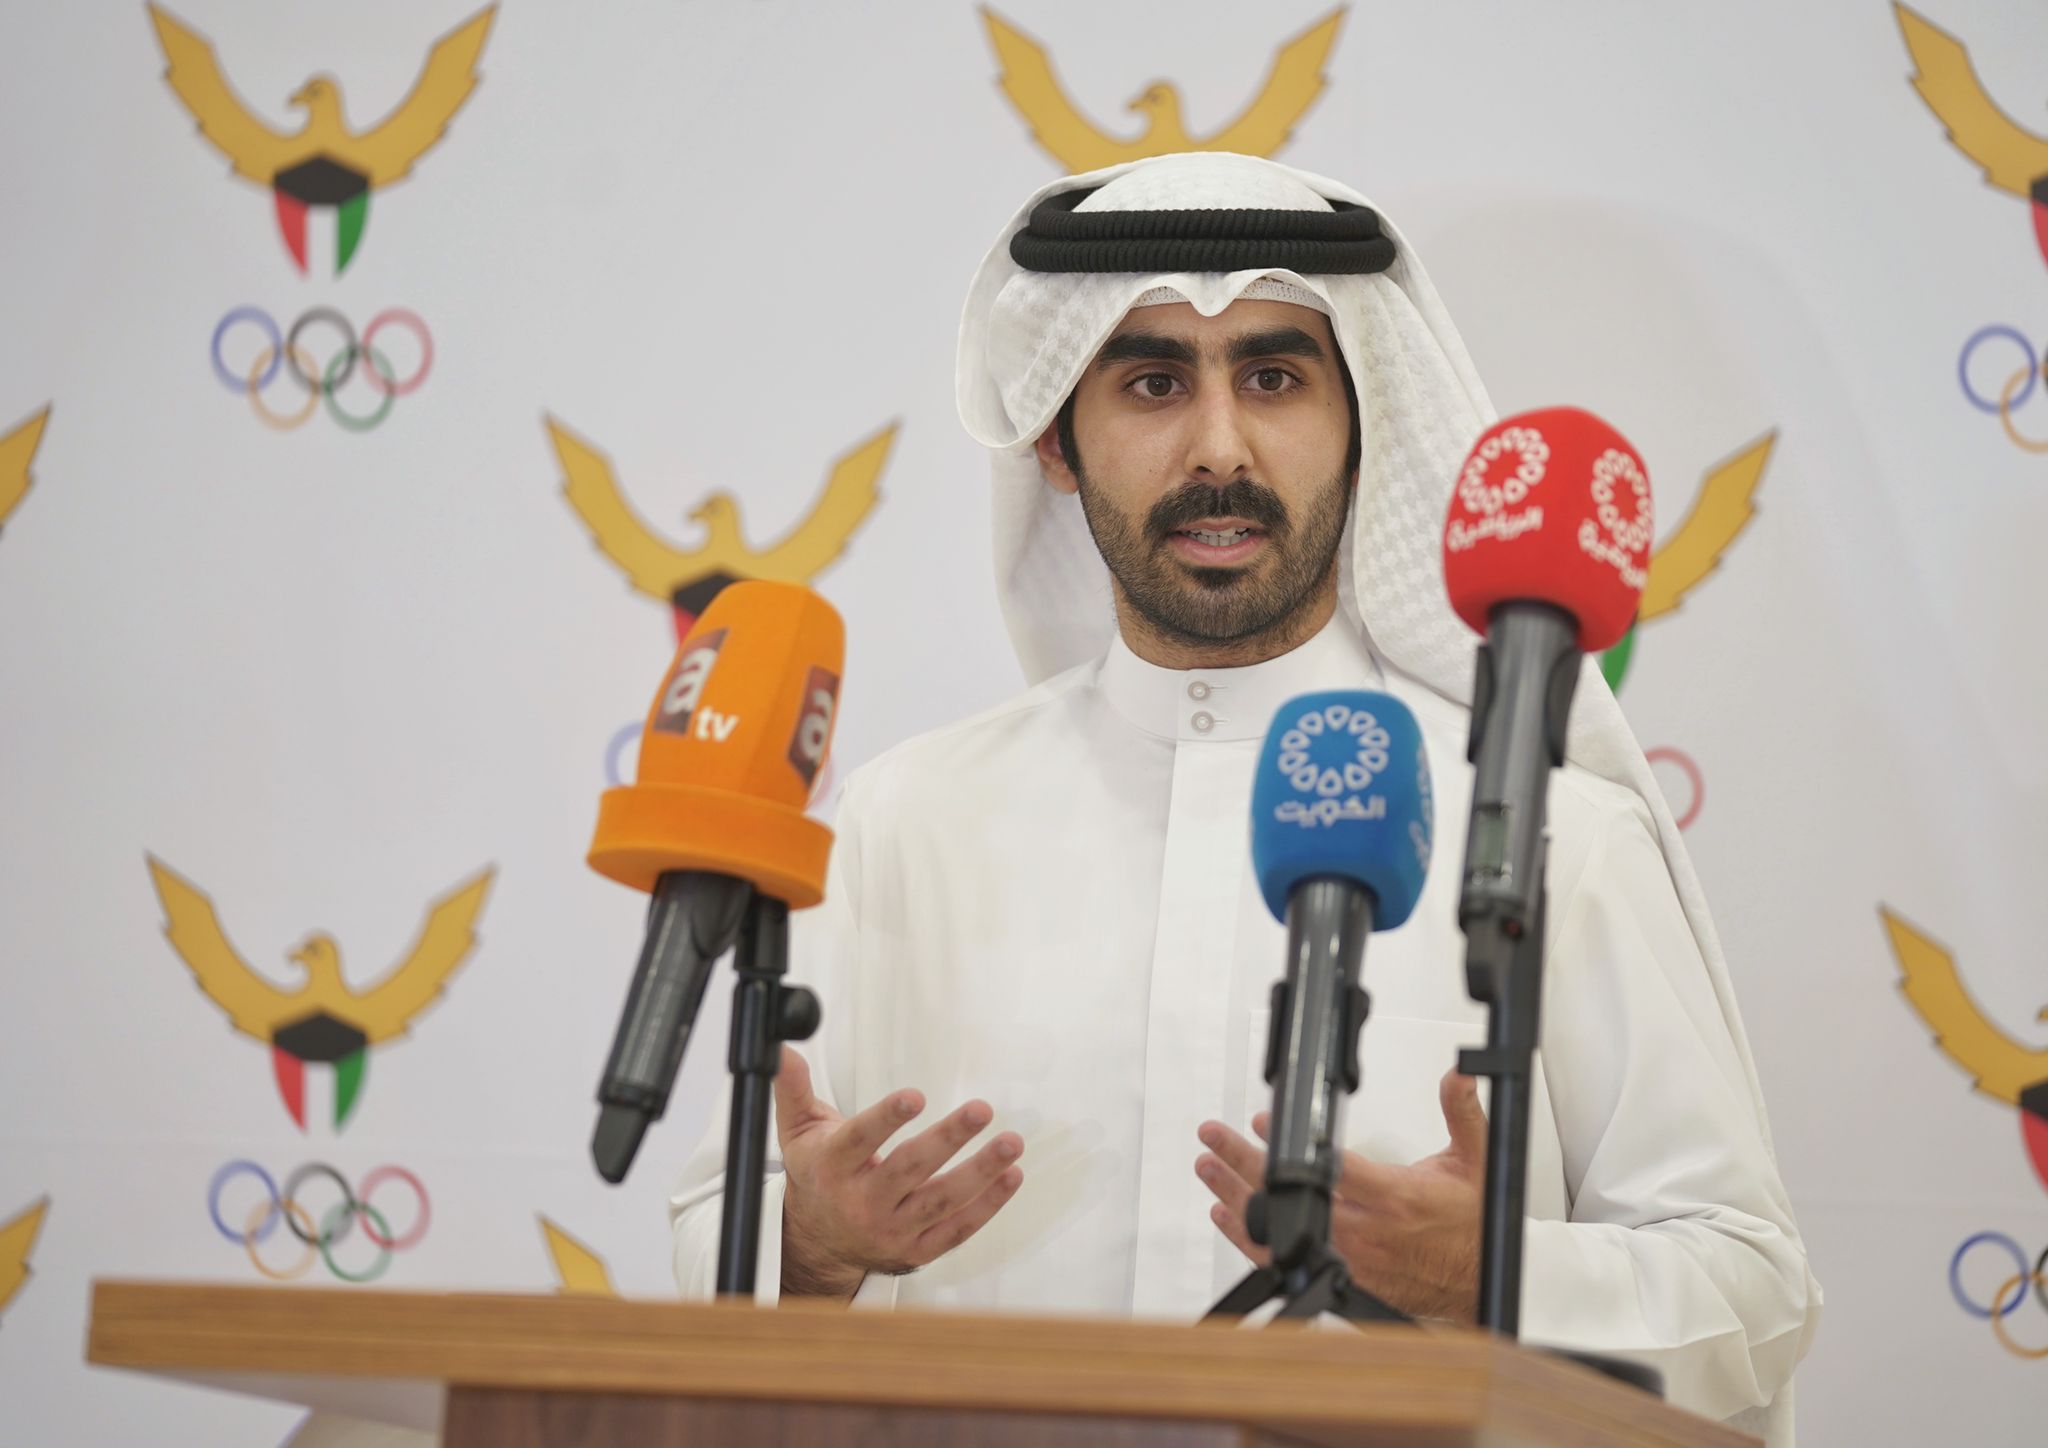 Kuwait Olympic Committee (KOC) Sheikh Jaber Thamer Al-Ahmad Al-Sabah